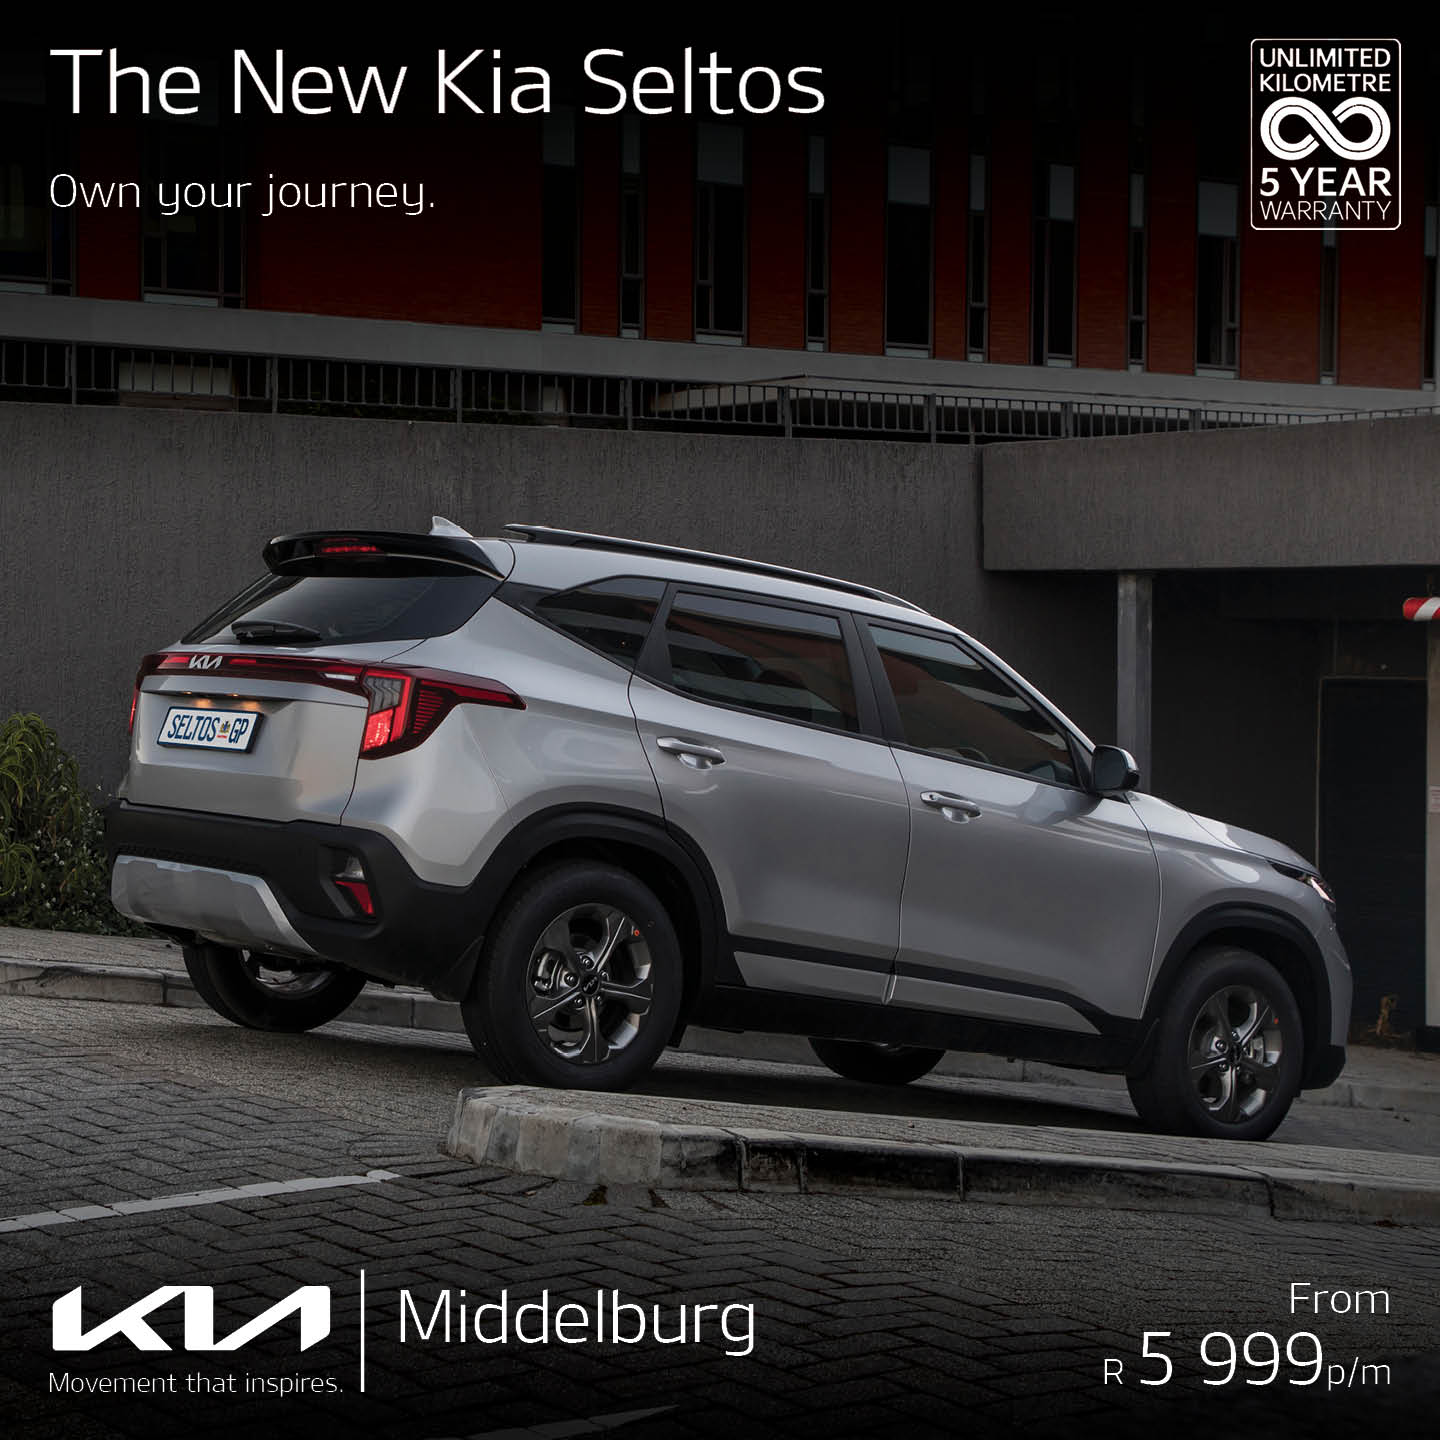 The New KIA Seltos image from Eastvaal Motors